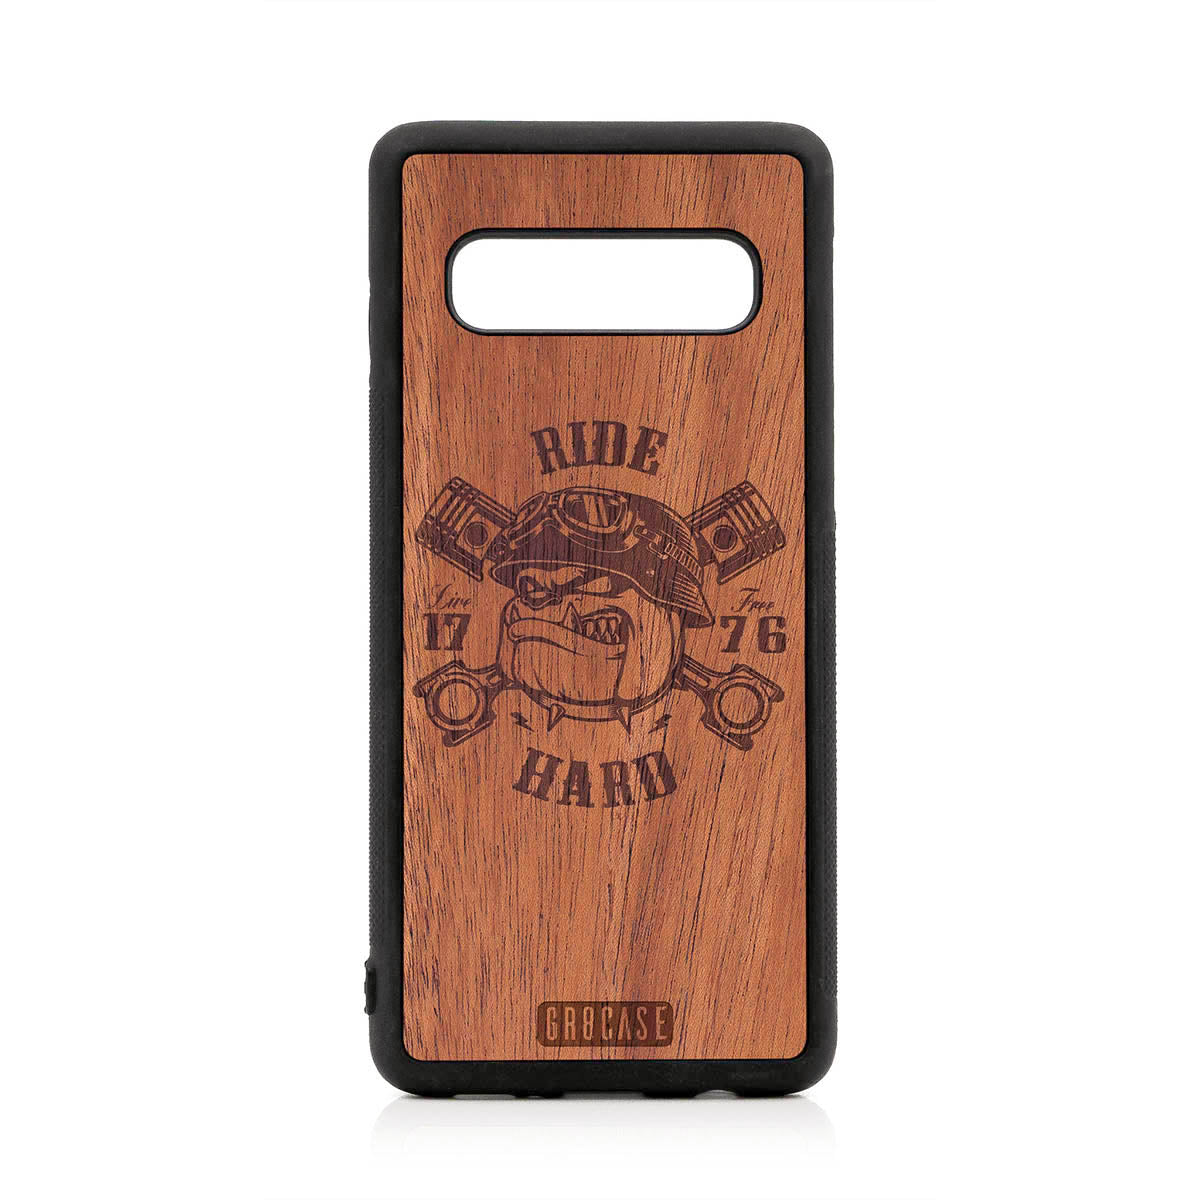 Ride Hard Live Free (Biker Dog) Design Wood Case For Samsung Galaxy S10 by GR8CASE